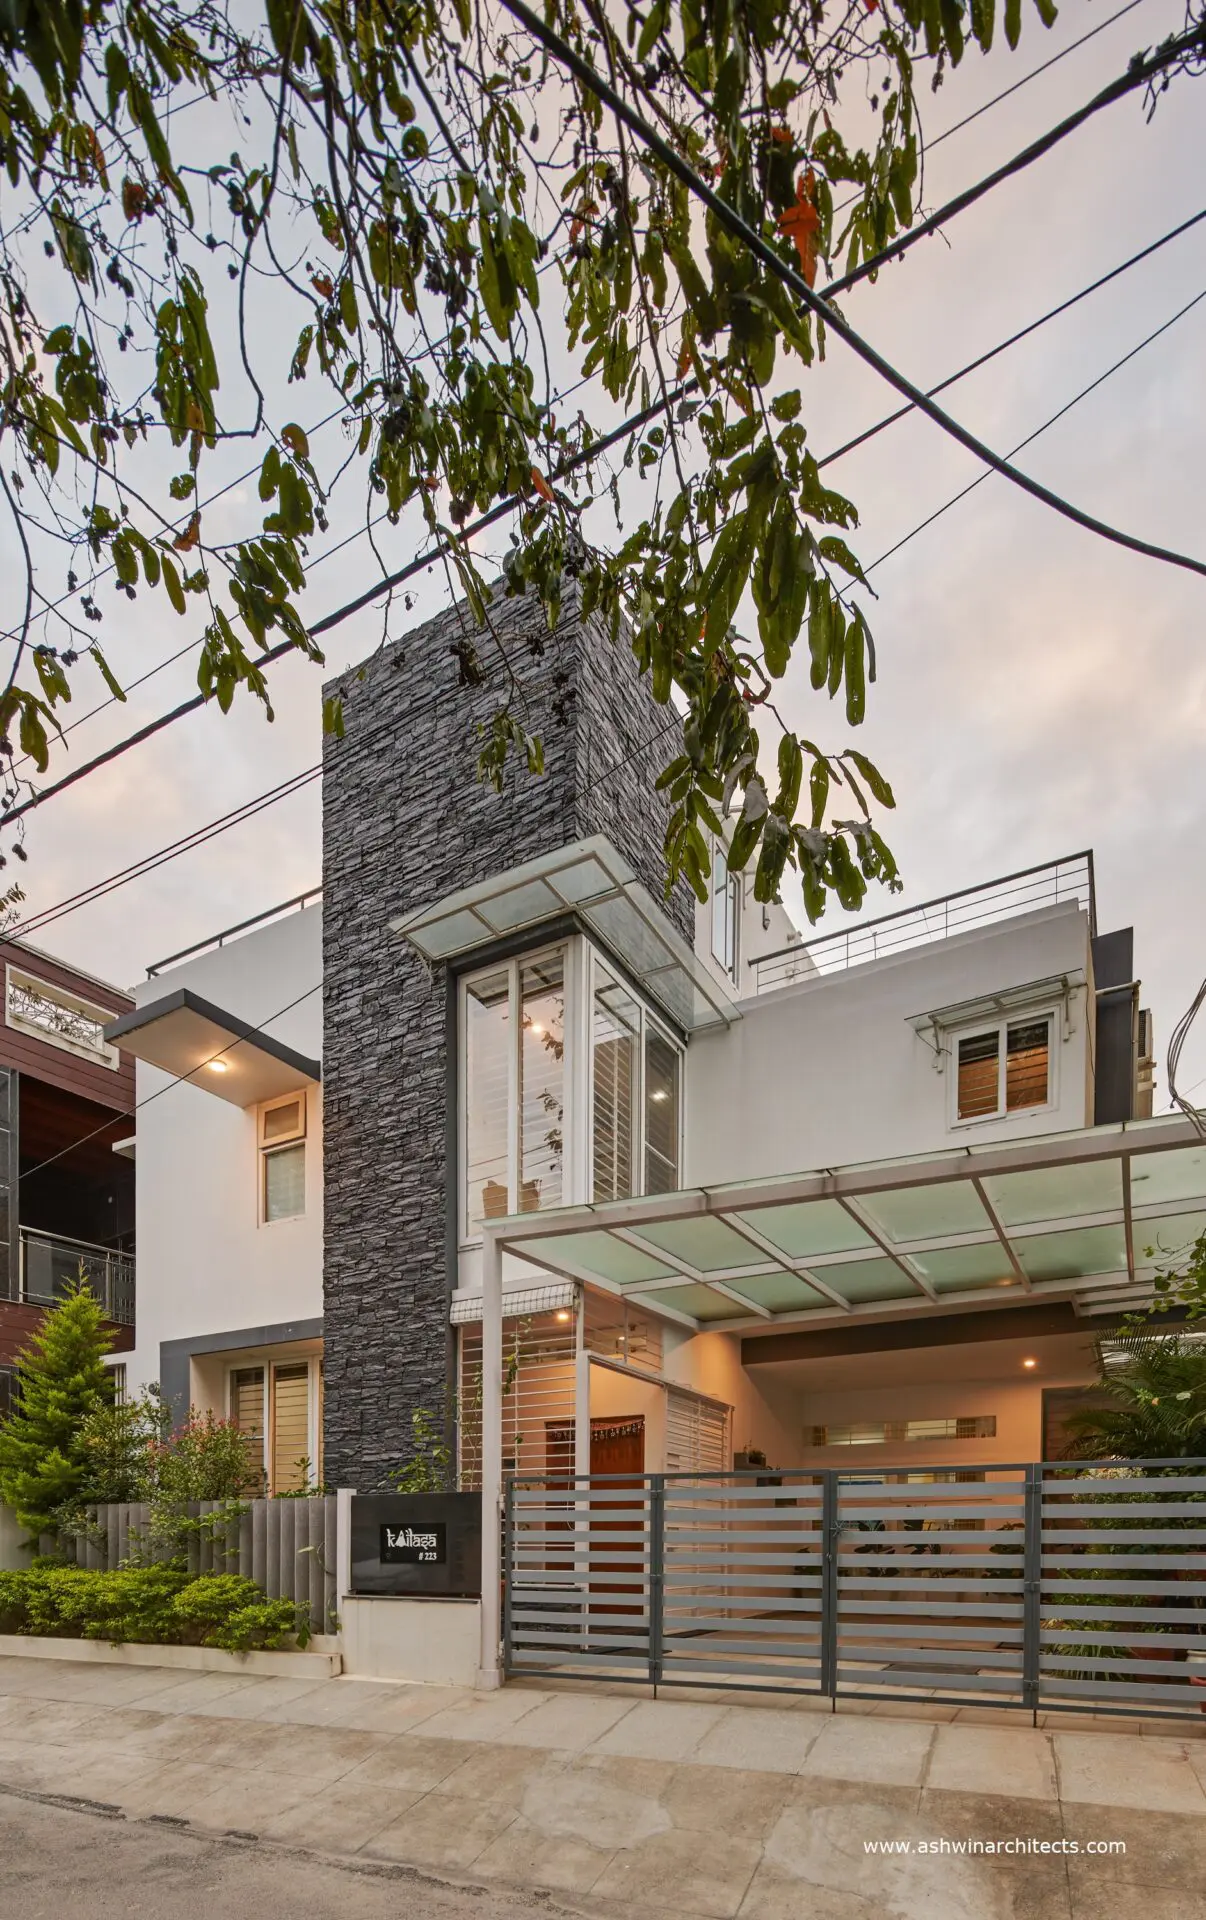 40x60-plot-Side-View-Kailash-Residence-40-x-60-Plot-3BHK-Duplex-Bungalow-3500-sft.-Family-Home-Design